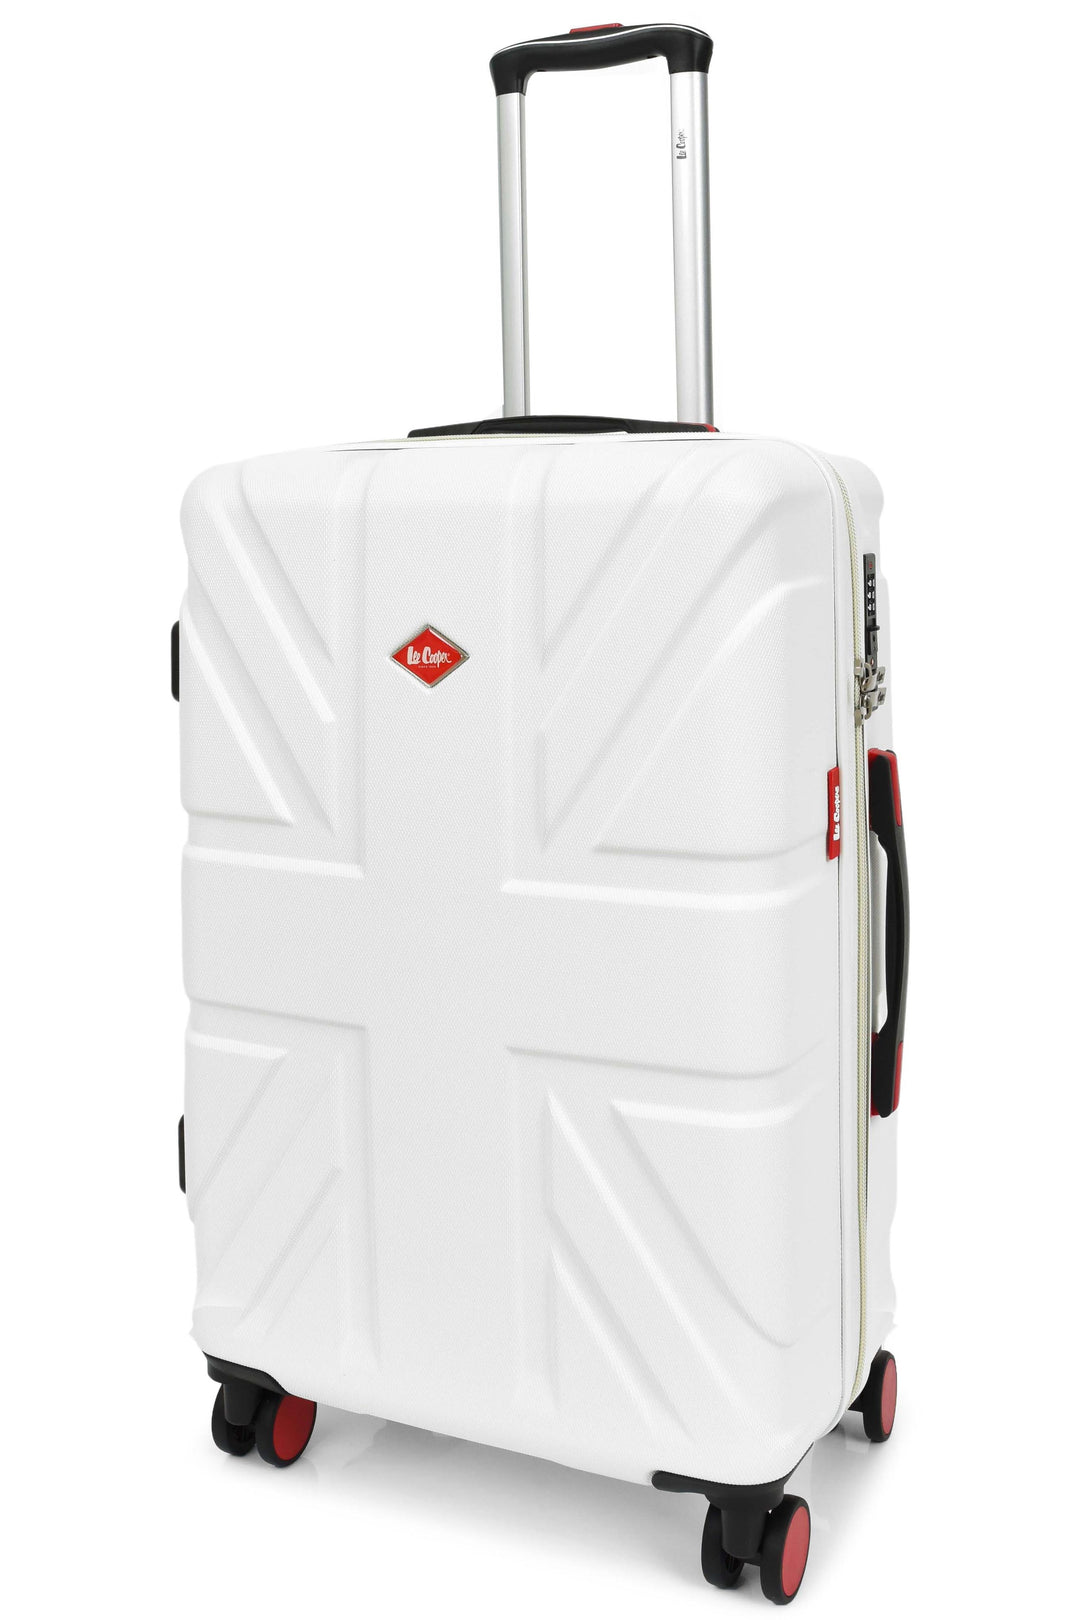 Lee Cooper Union Jack Suitcase